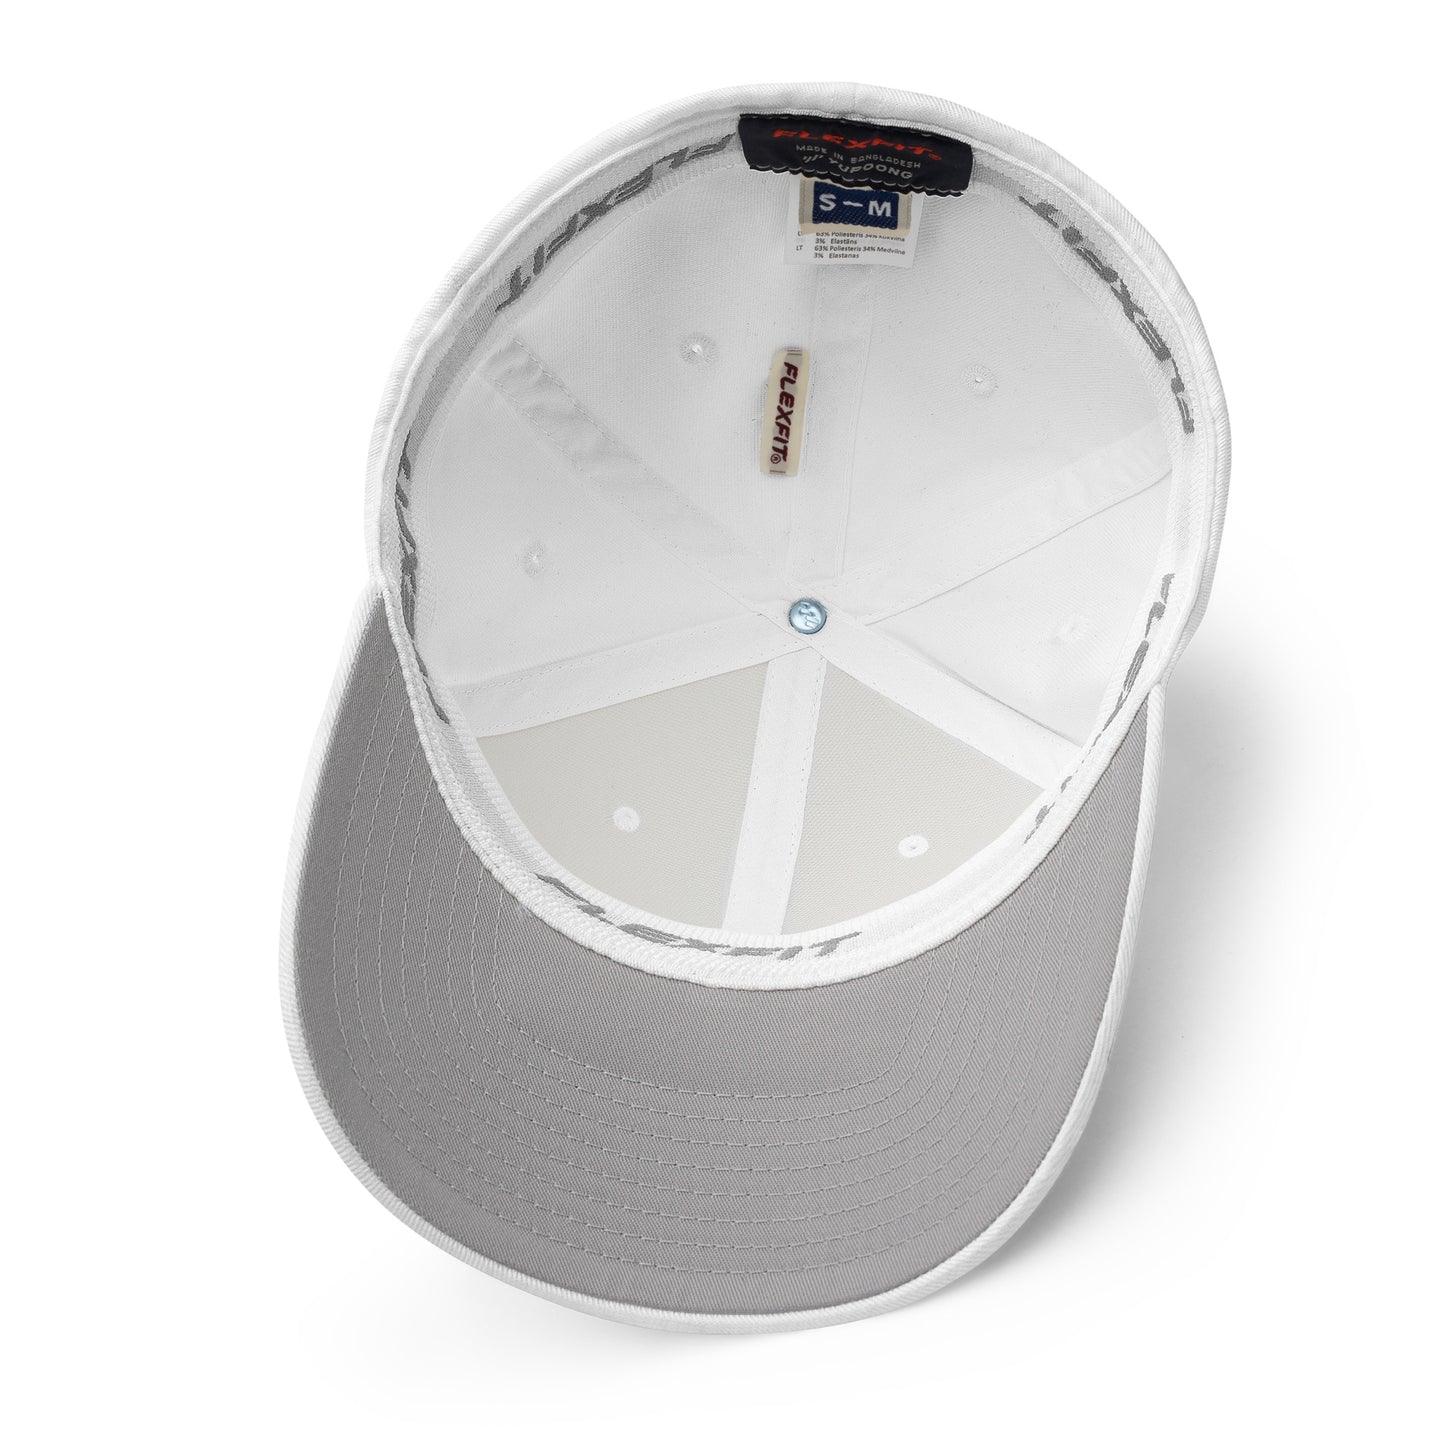 Unisex Warsaken® Hat : Flexfit : Logo : White